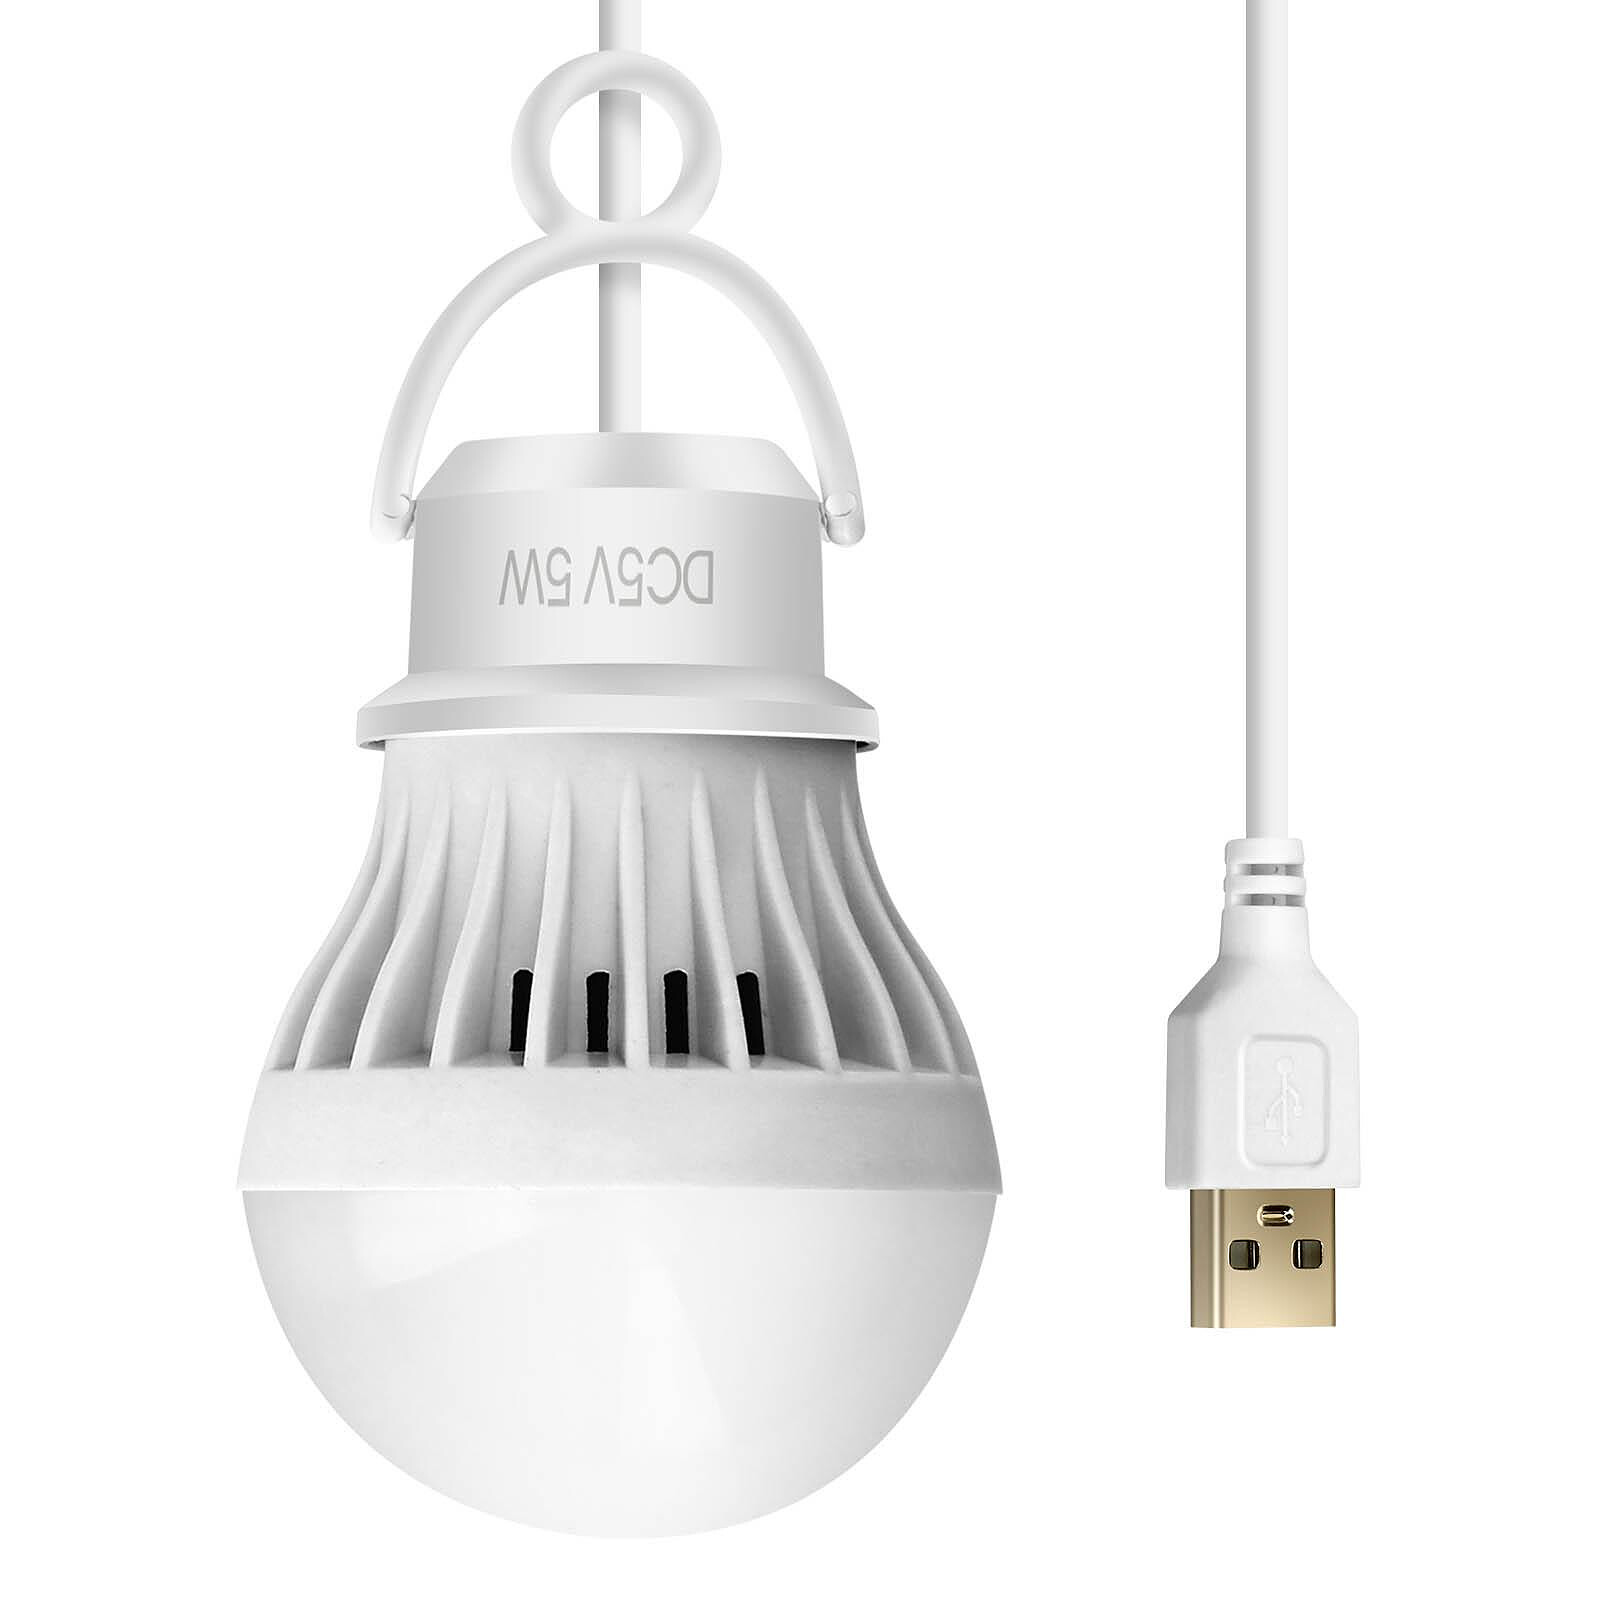 Lampe LED USB